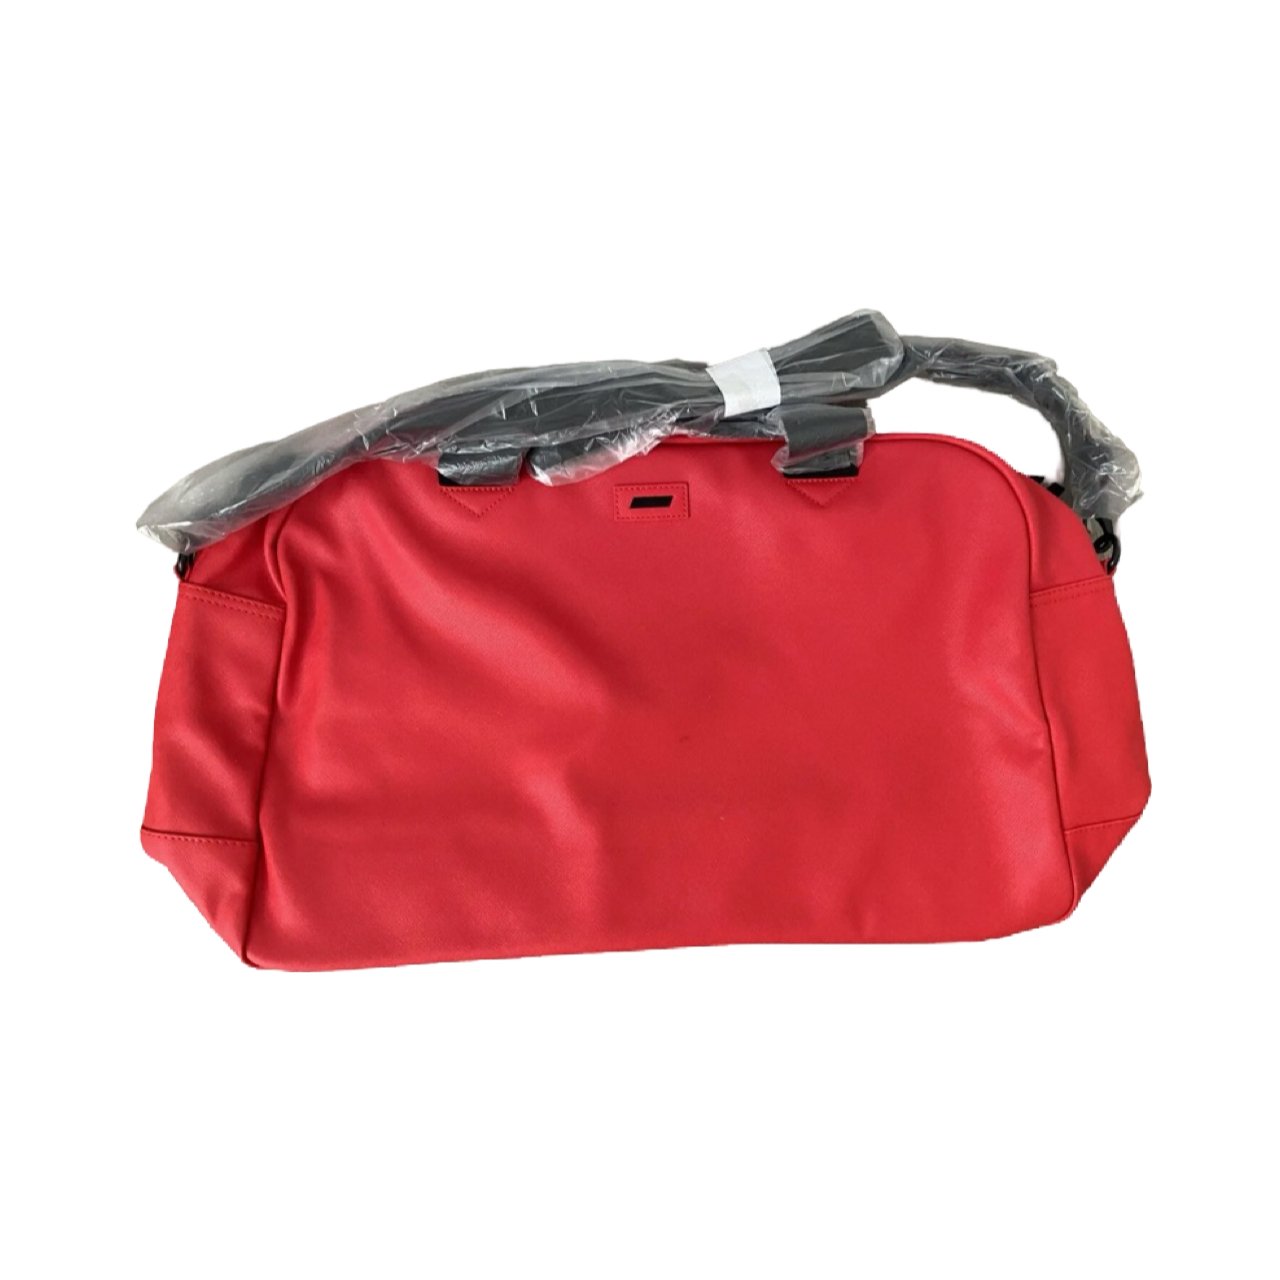 Puma Ferrari Red Large Bag LS3 Weekender in Faux Leather- 32L - Soul and Sense Streetwear